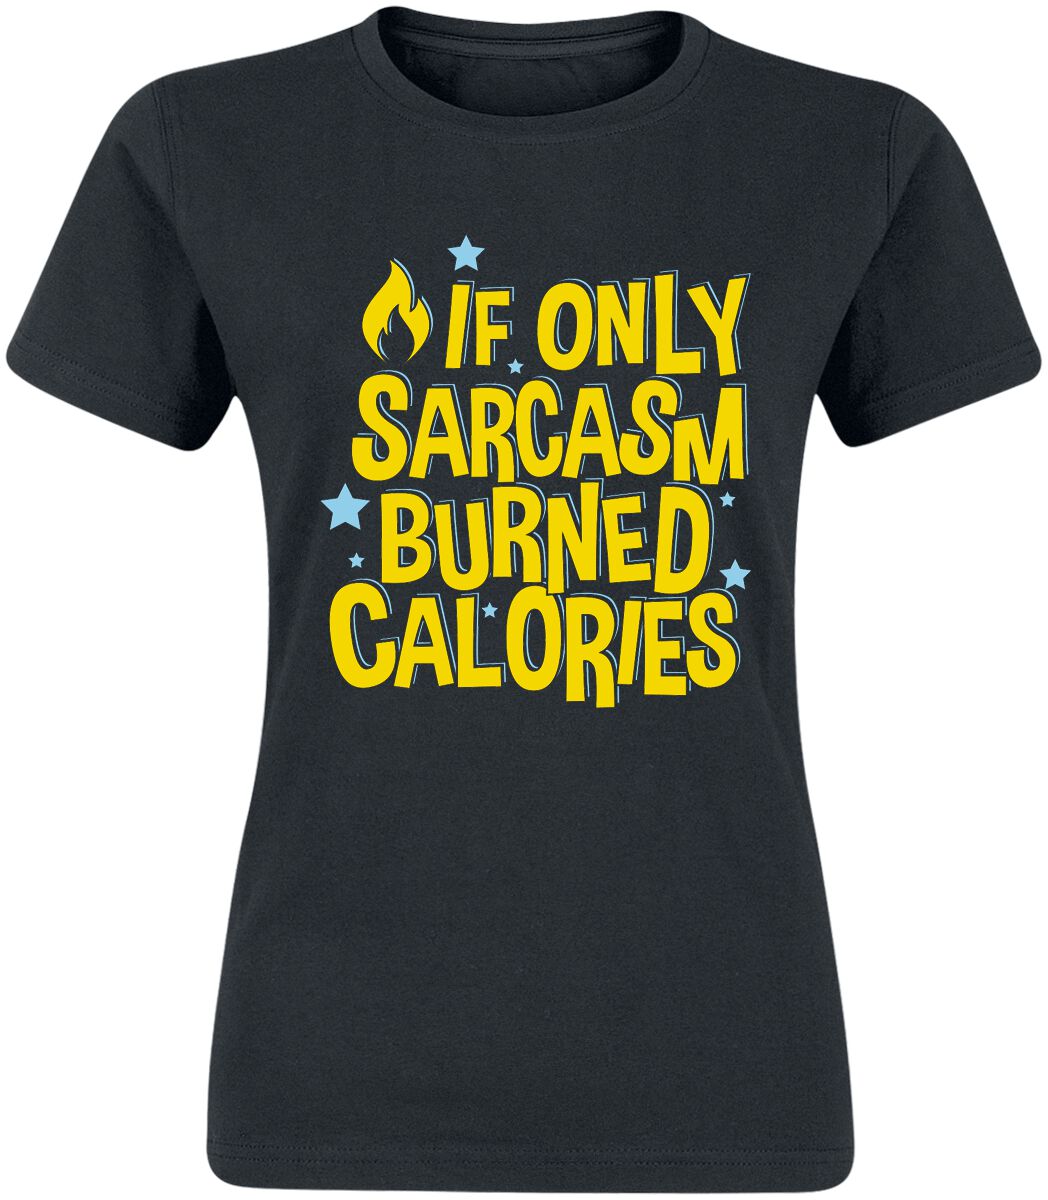 Slogans If Only Sarcasm Burned Calories T-Shirt black